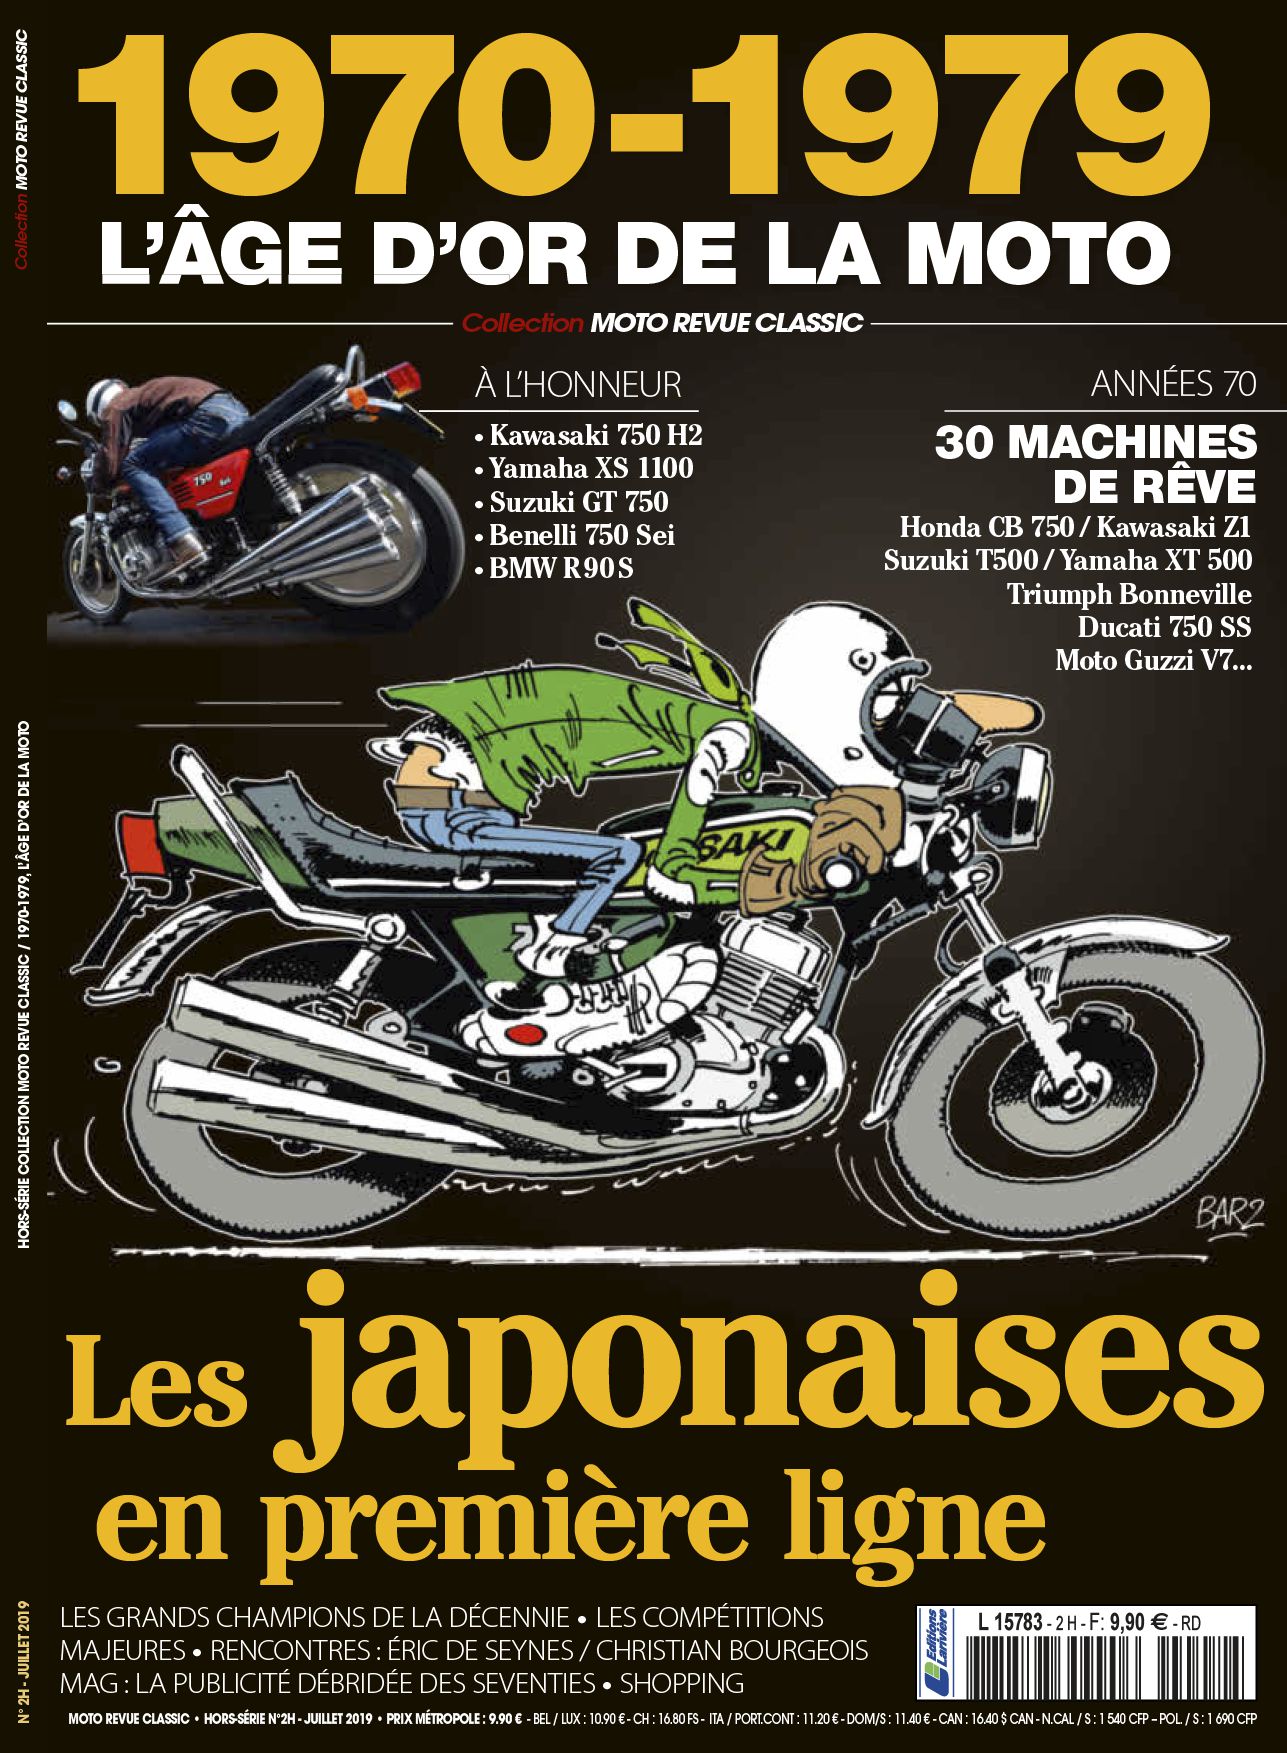 1970-1979 L'age d'or de la moto